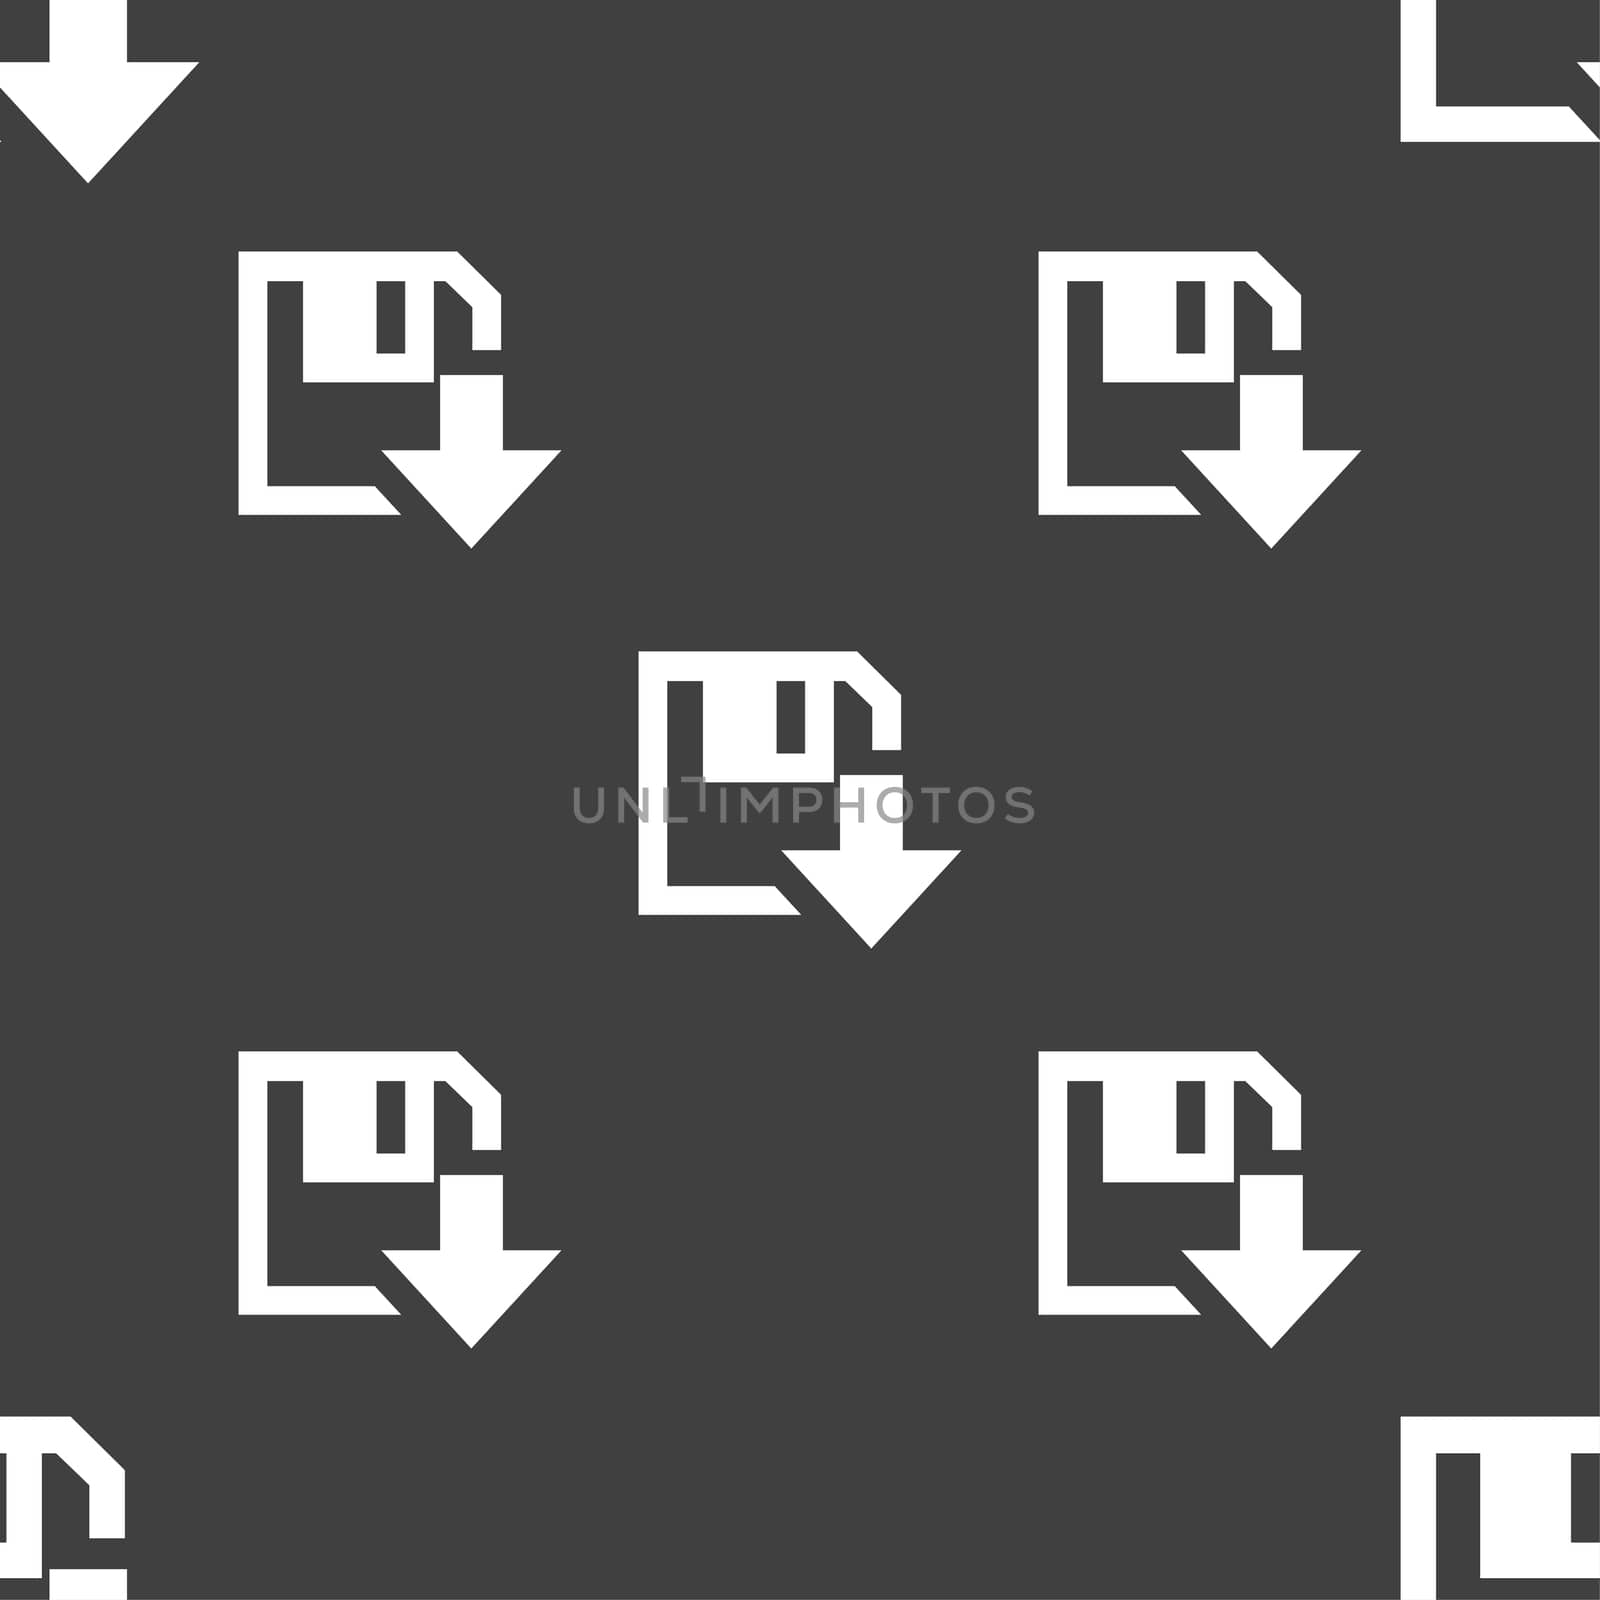 floppy icon. Flat modern design. Seamless pattern on a gray background. illustration